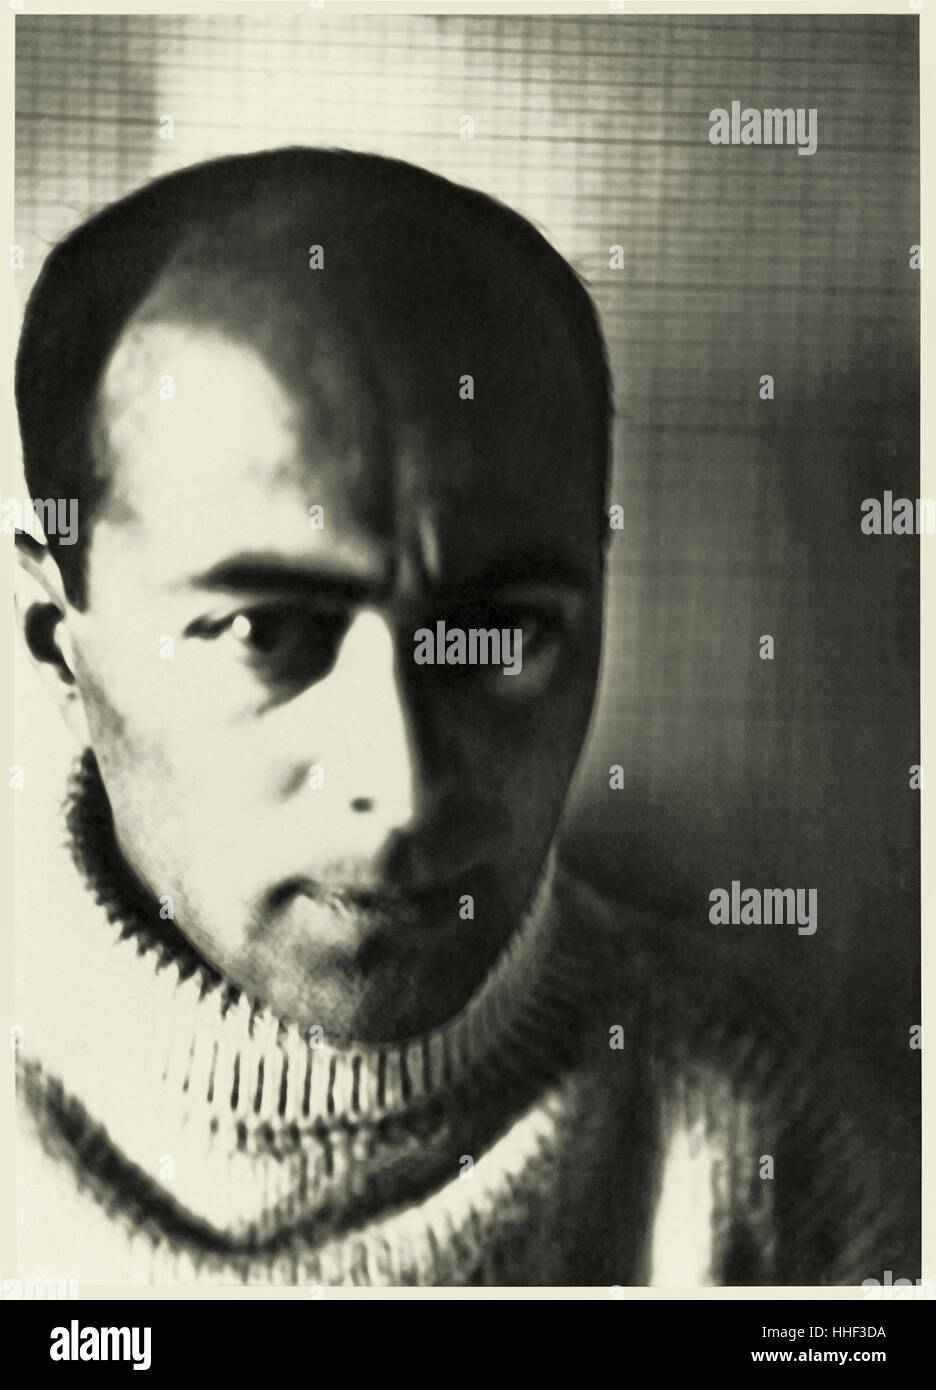 El Lissitzky (1890-1941) Russian architect, artist and photographer, self portrait ‘Selbstbildnis’ 1924 gelatin silver print. Stock Photo